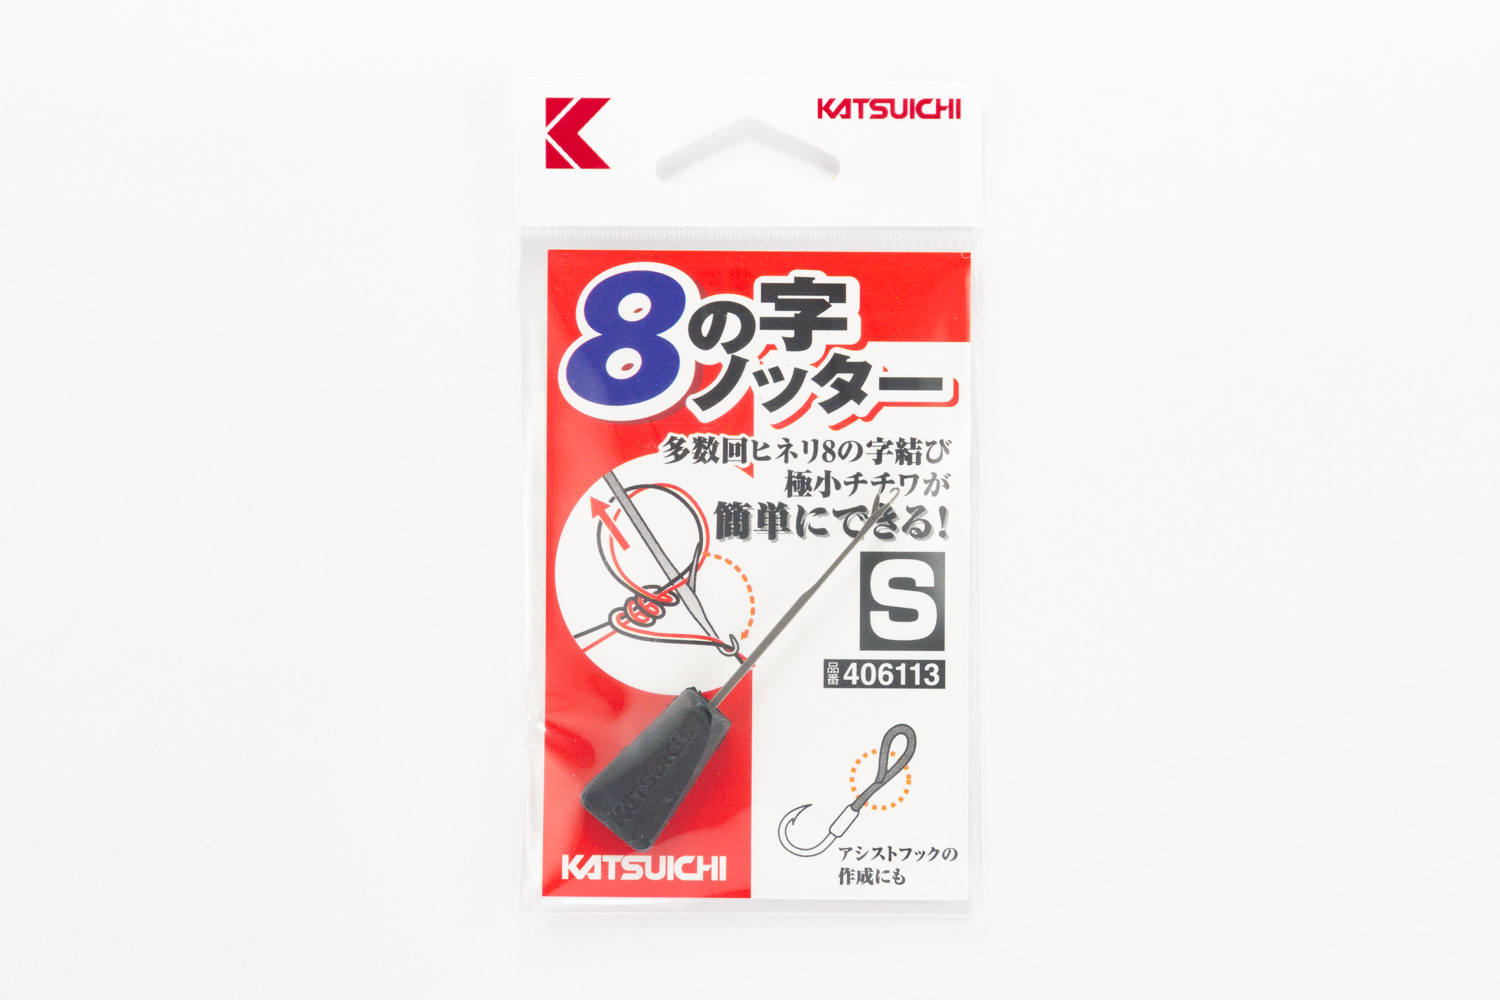 KATSUICHI 『8の字ノッター』 - 株式会社カツイチ